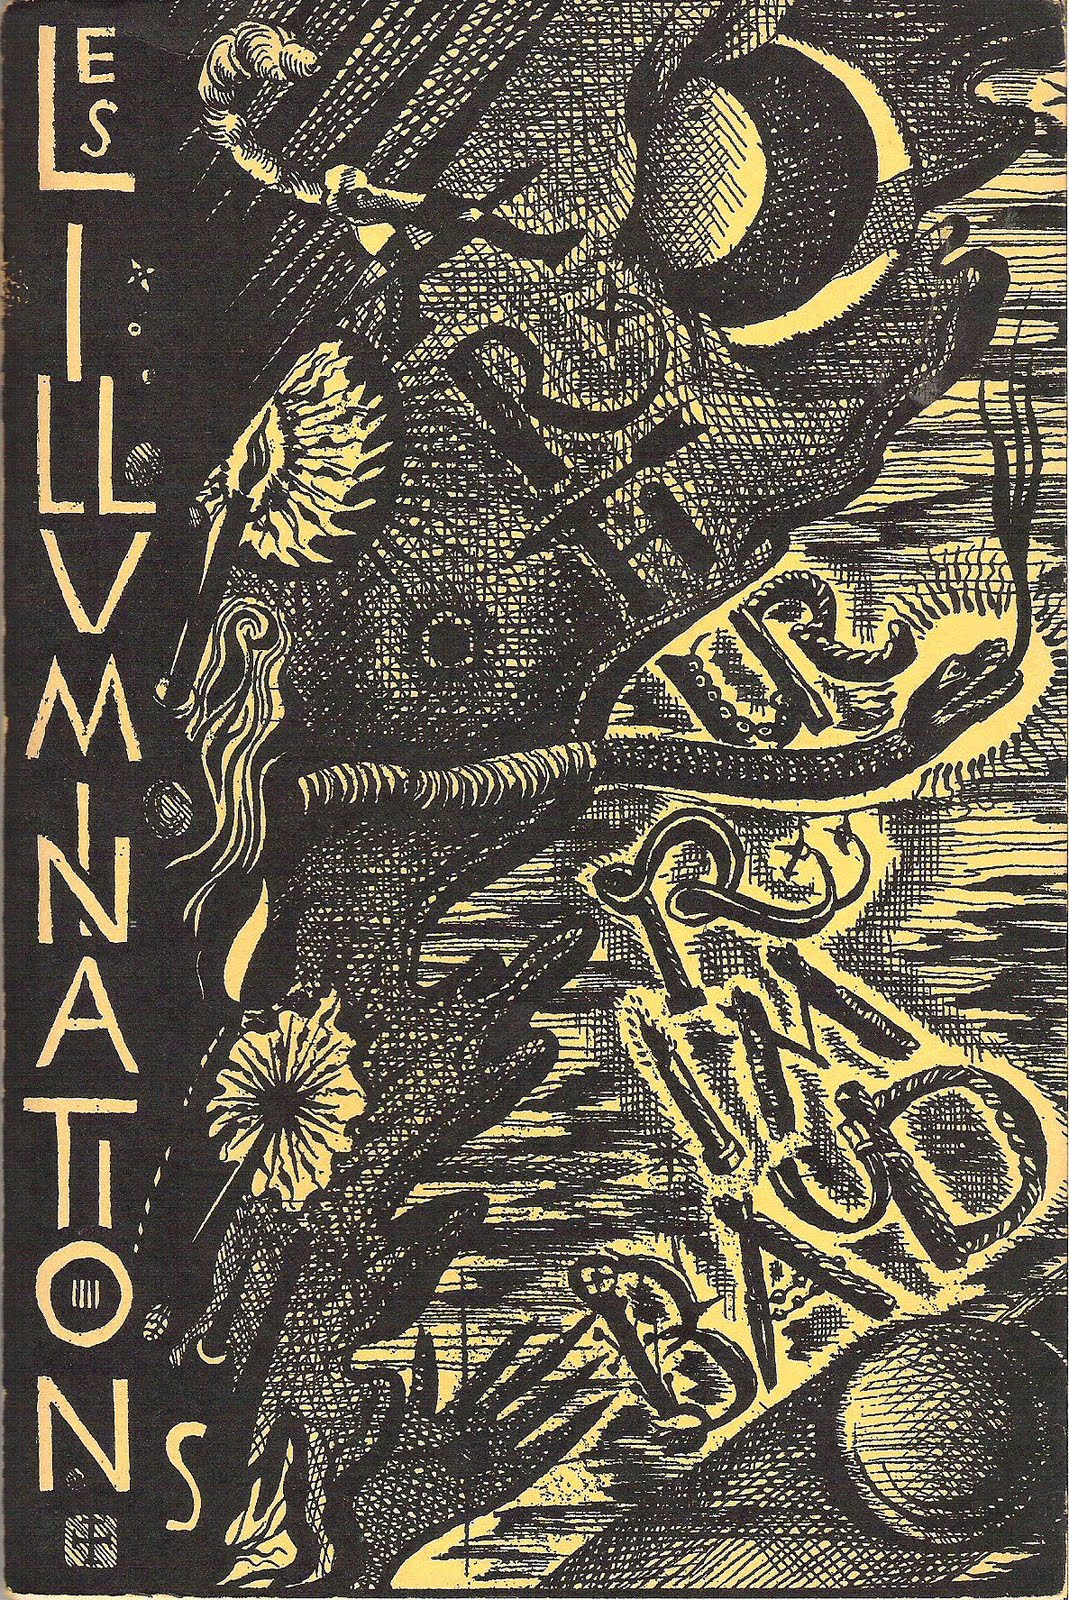 My Rimbaud Collection: Les Illuminations